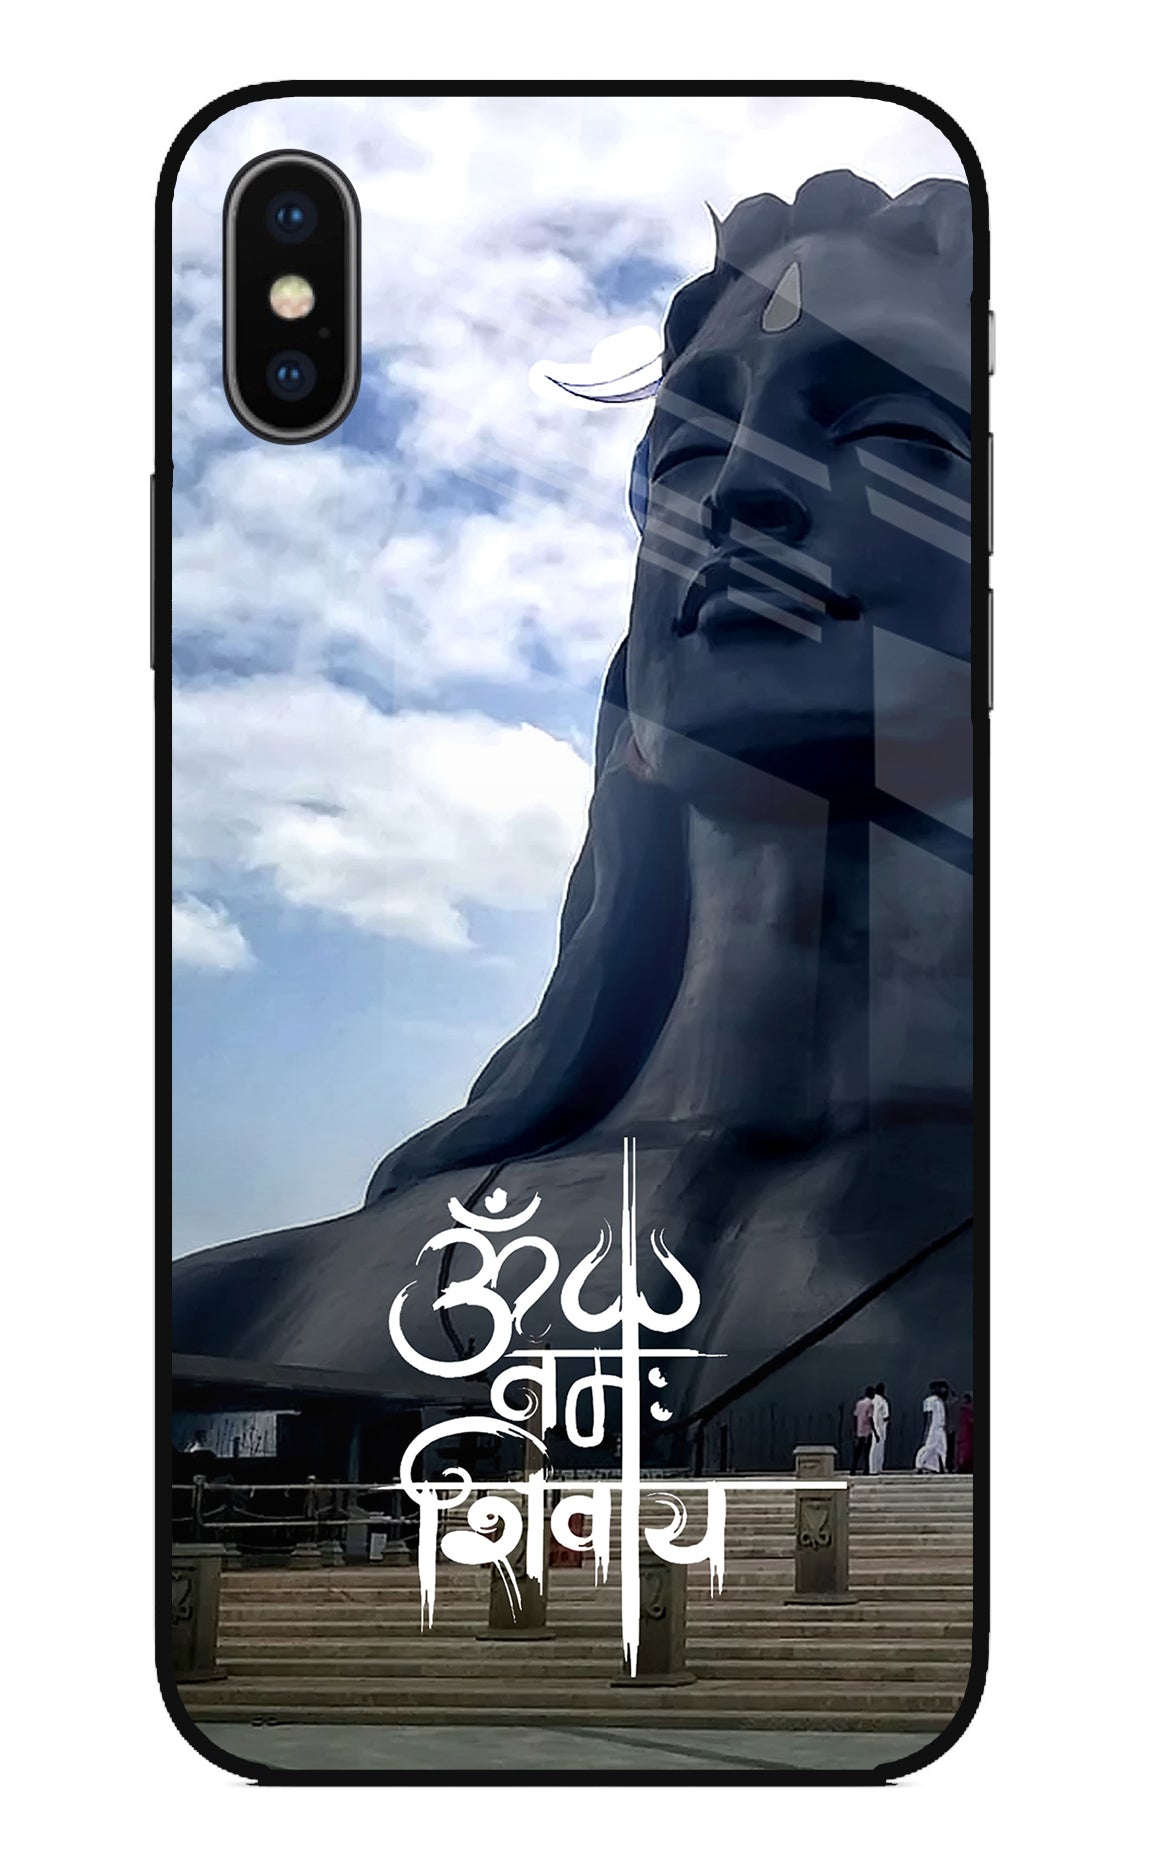 Om Namah Shivay iPhone XS Back Cover